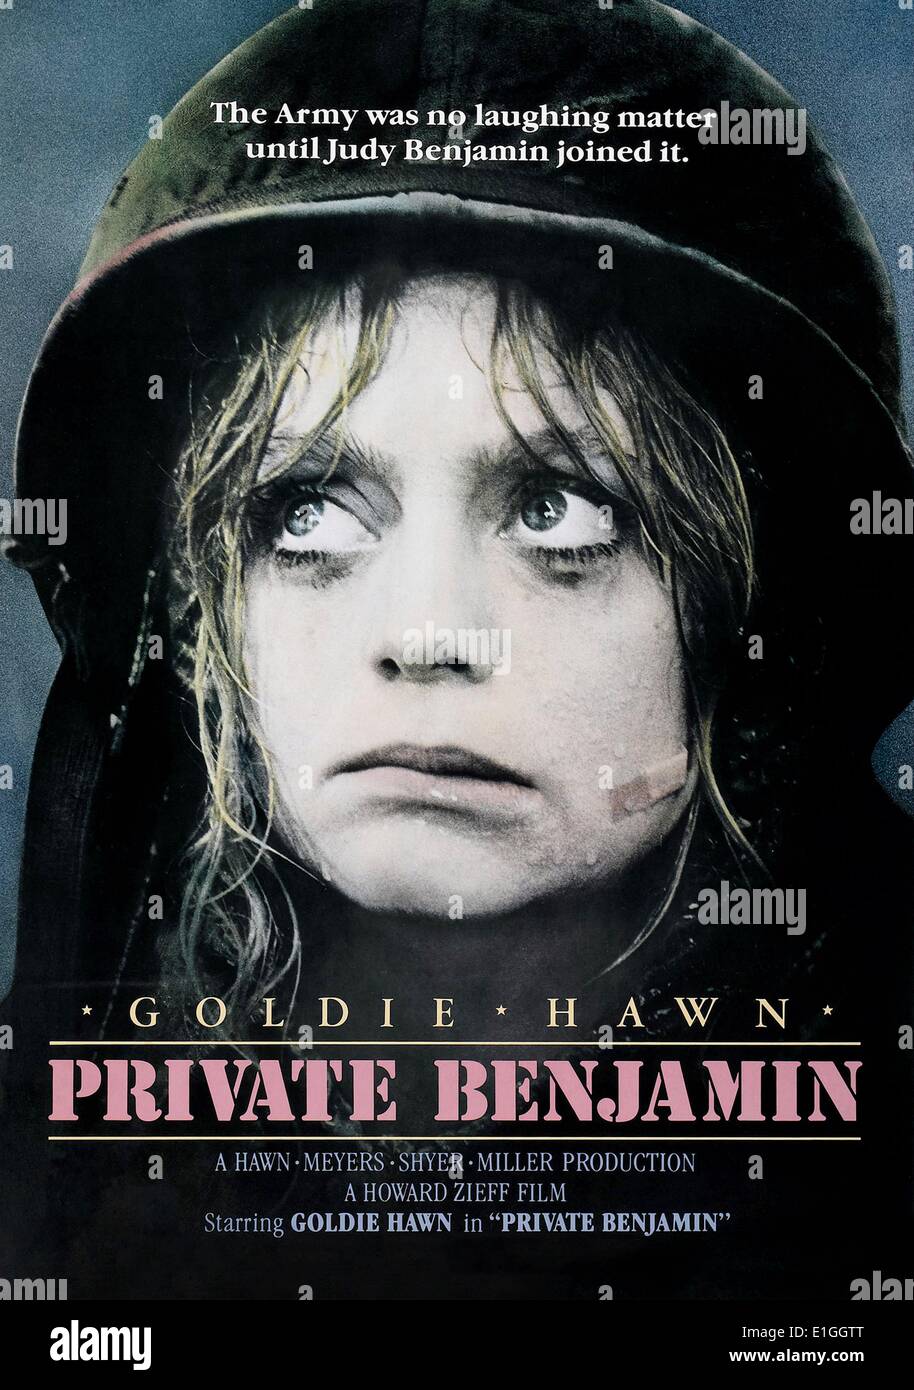 Private Benjamin, 1980 American Comedy Film starring Goldie Hawn. Stockfoto